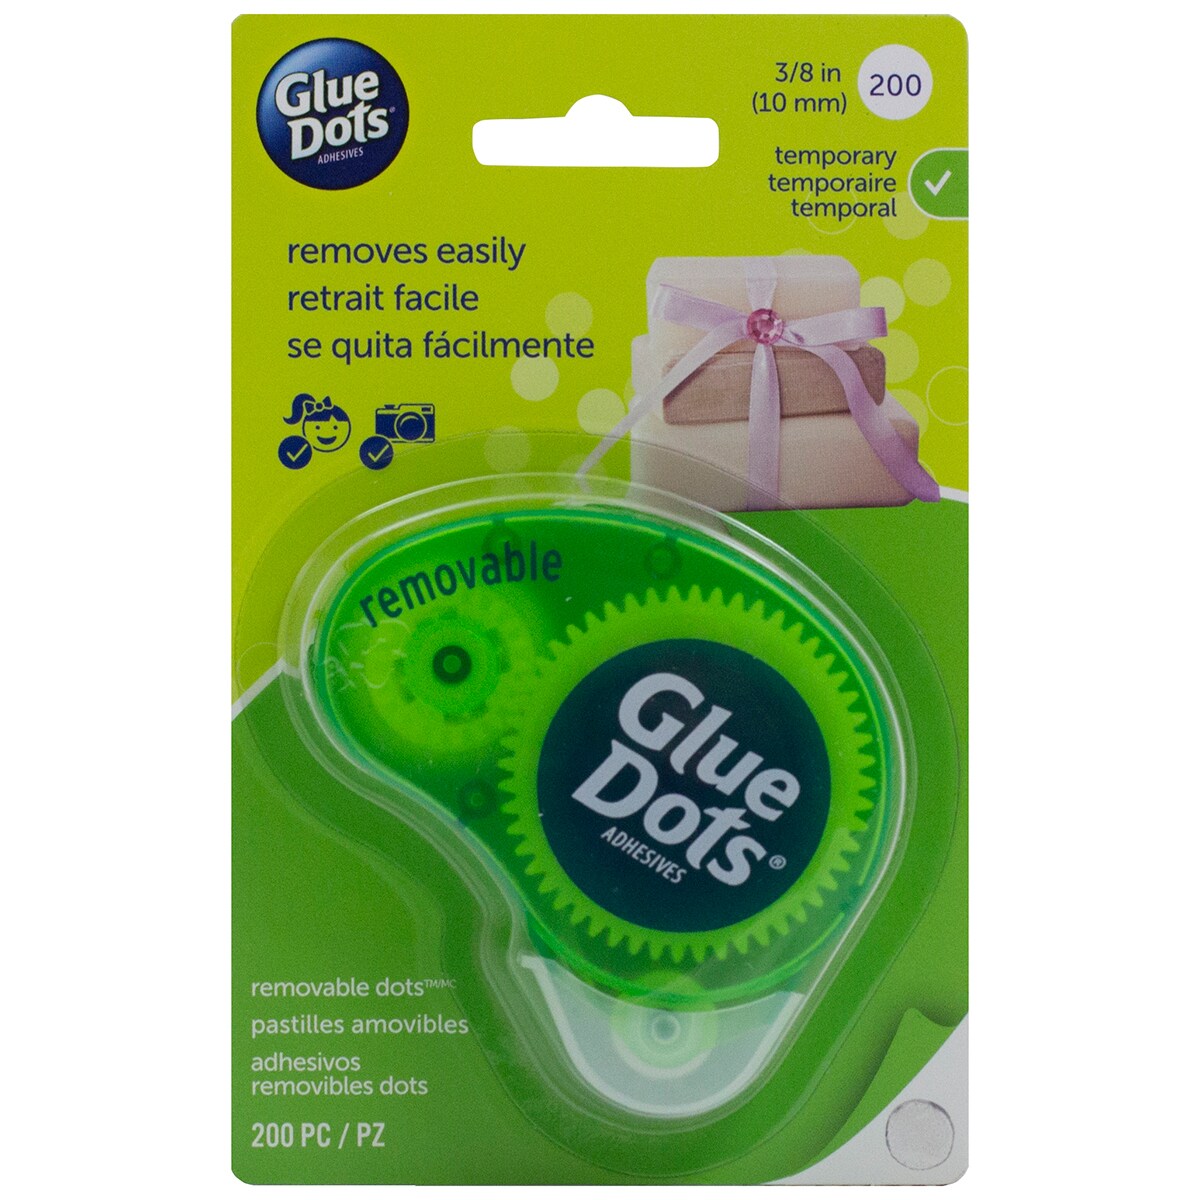 Glue Dots .375 Removable Dot Disposable Dispenser-200 Clear Dots